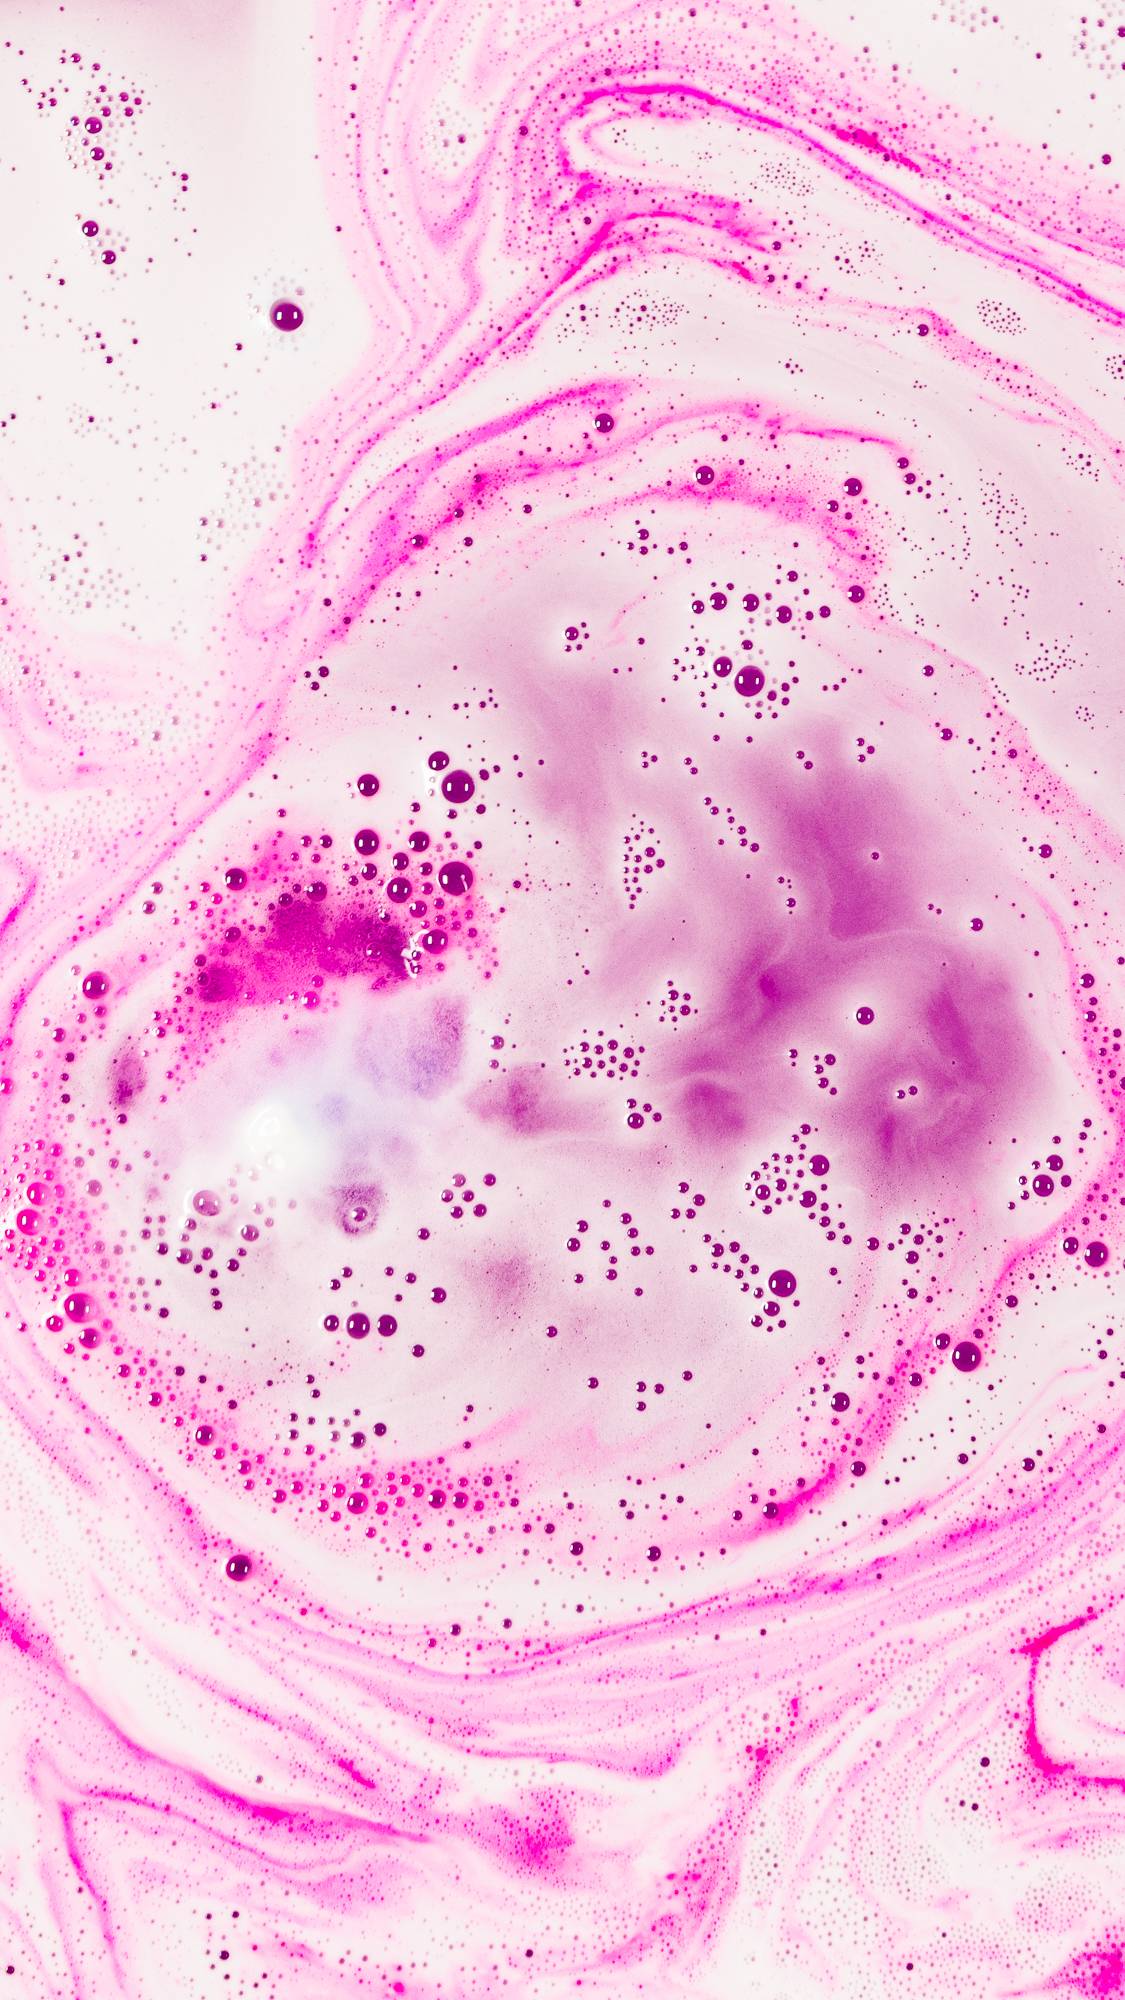 The Atom Heart Mother bath bomb has fully dissolved leaving vivid pink,  foamy swirls.